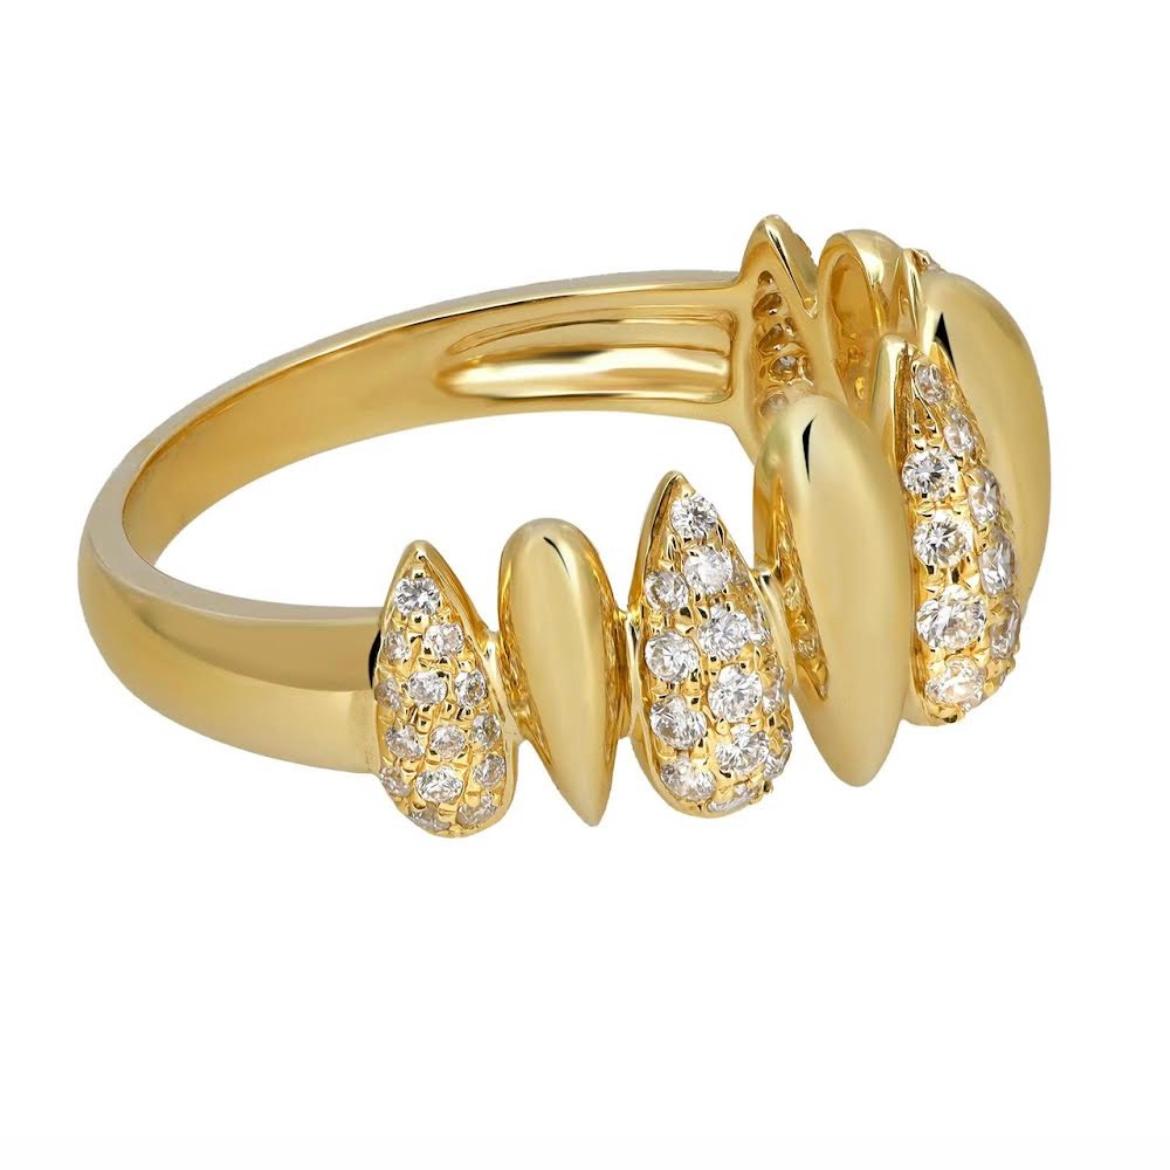 For Sale:  0.45 Carat Round Cut Diamond Fashion Ring 18K Yellow Gold 4